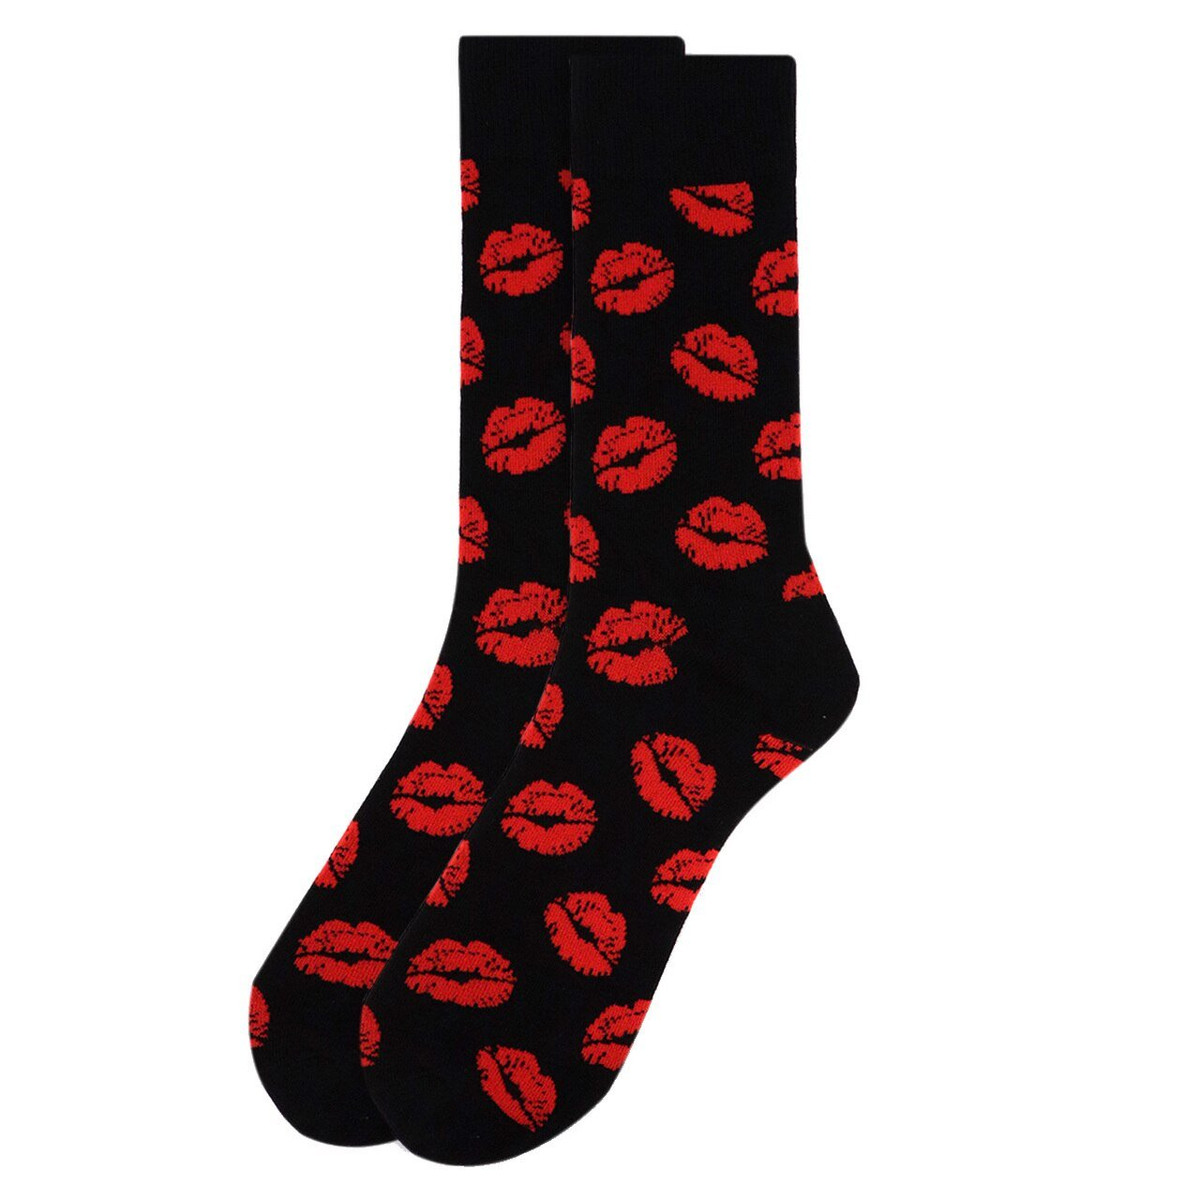 Pair of Men's Valentine's Day Lips Crew Novelty Socks - Black